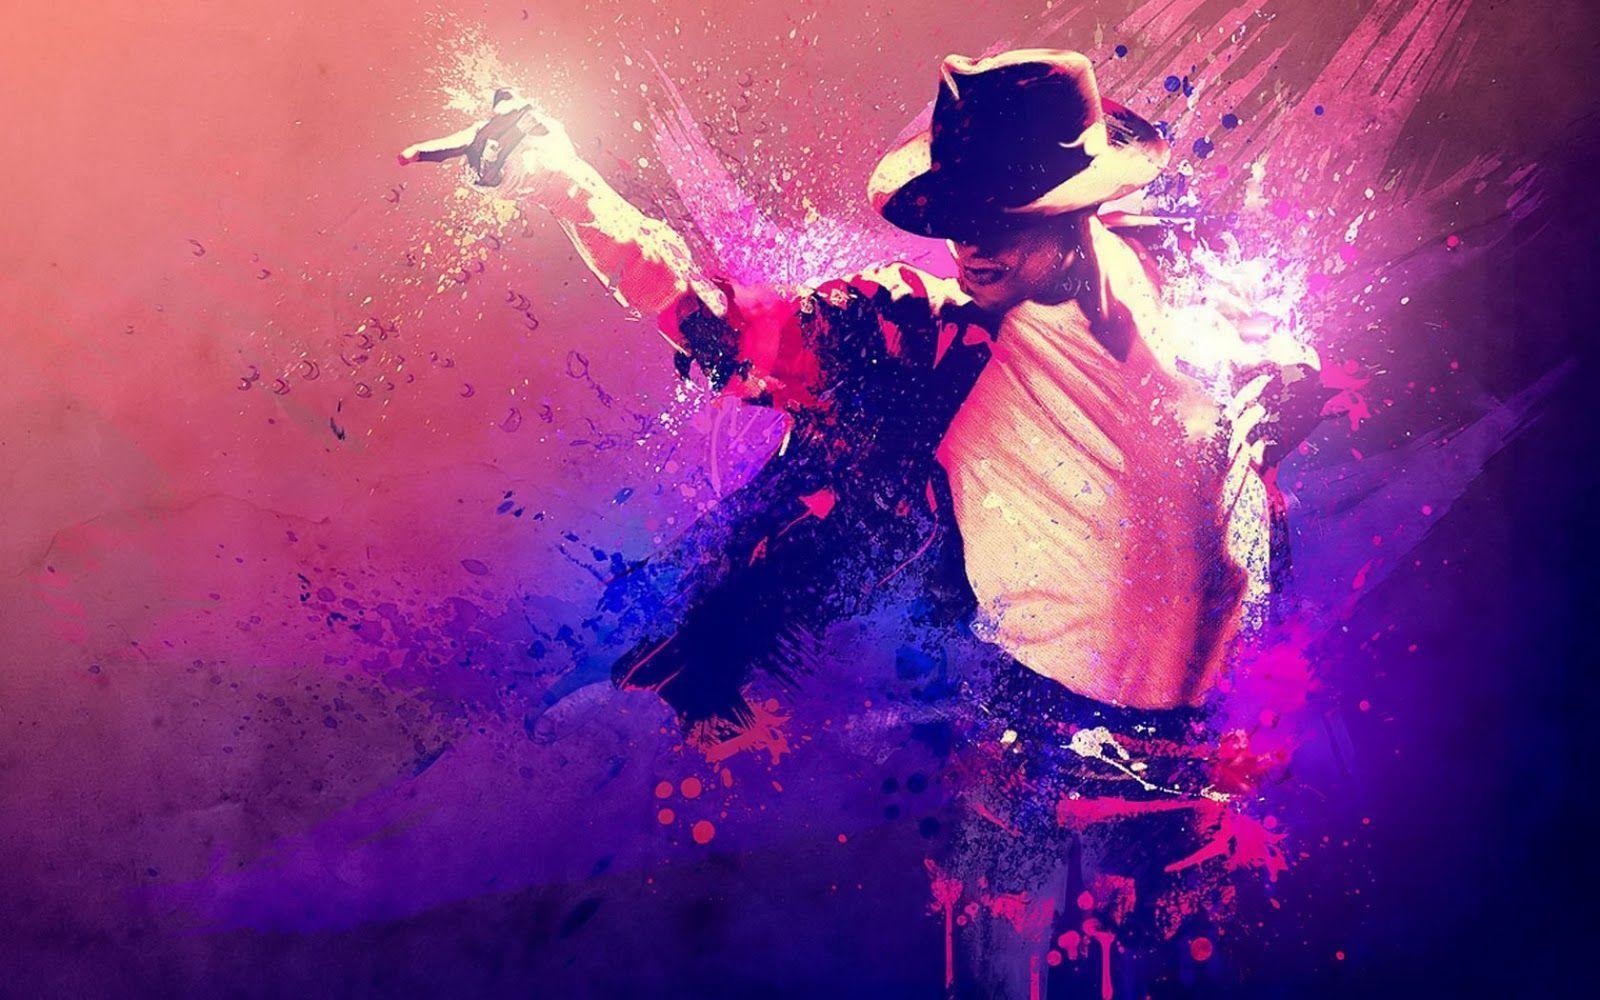 Michael Jackson Wallpaper Image 21258 HD Picture. Top